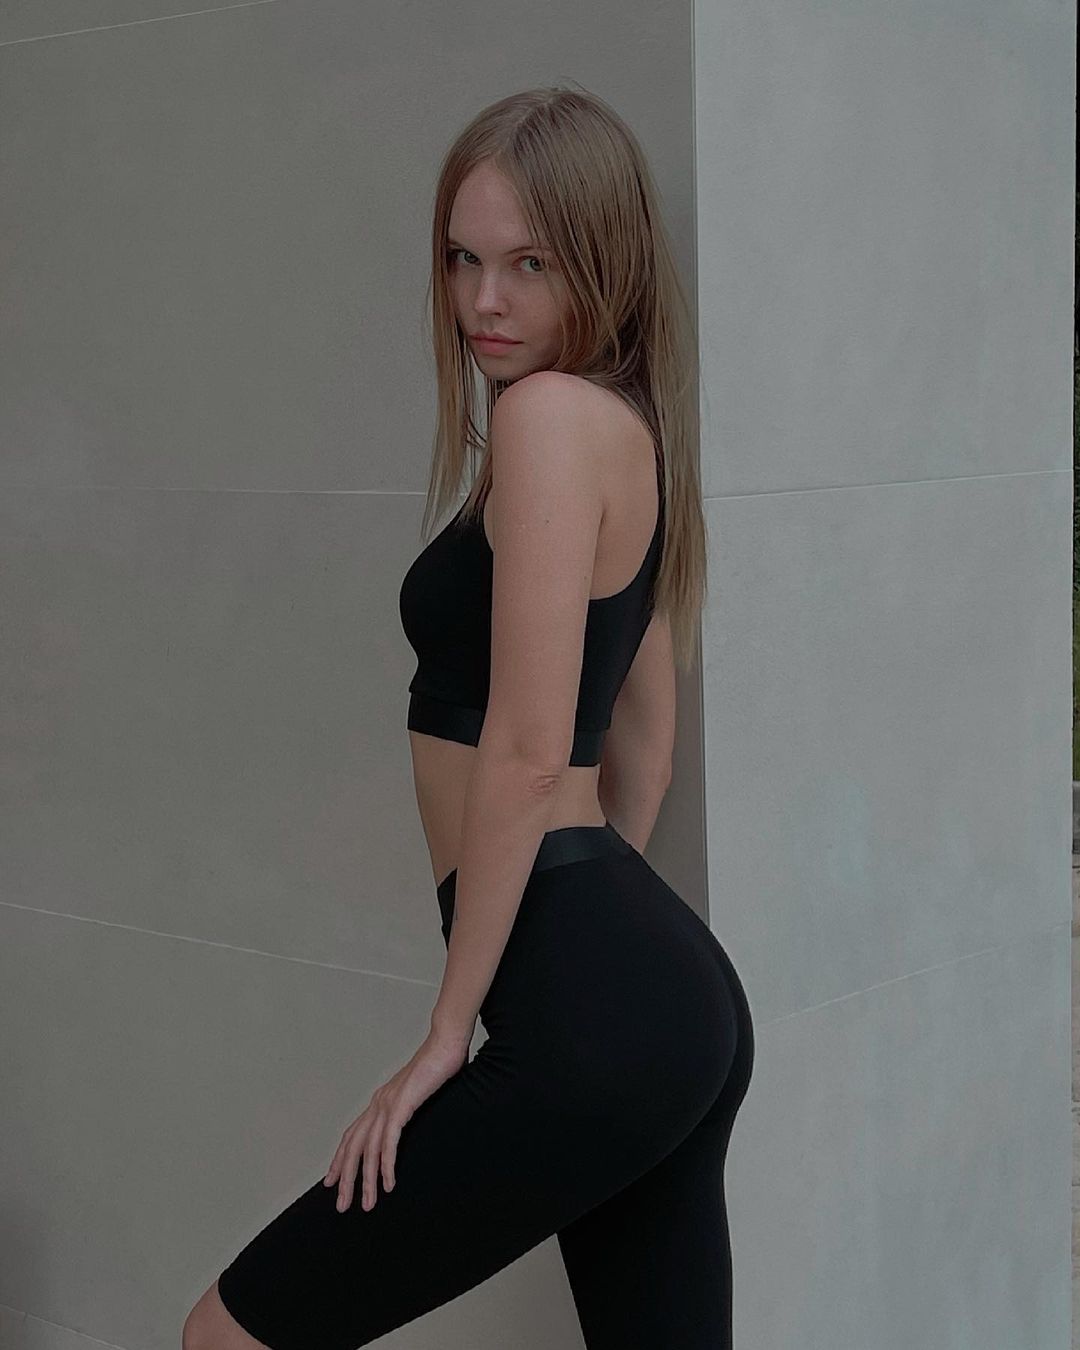 Anastasiya scheglova 7 фигура, волосы, тело, грудь, ноги, руки